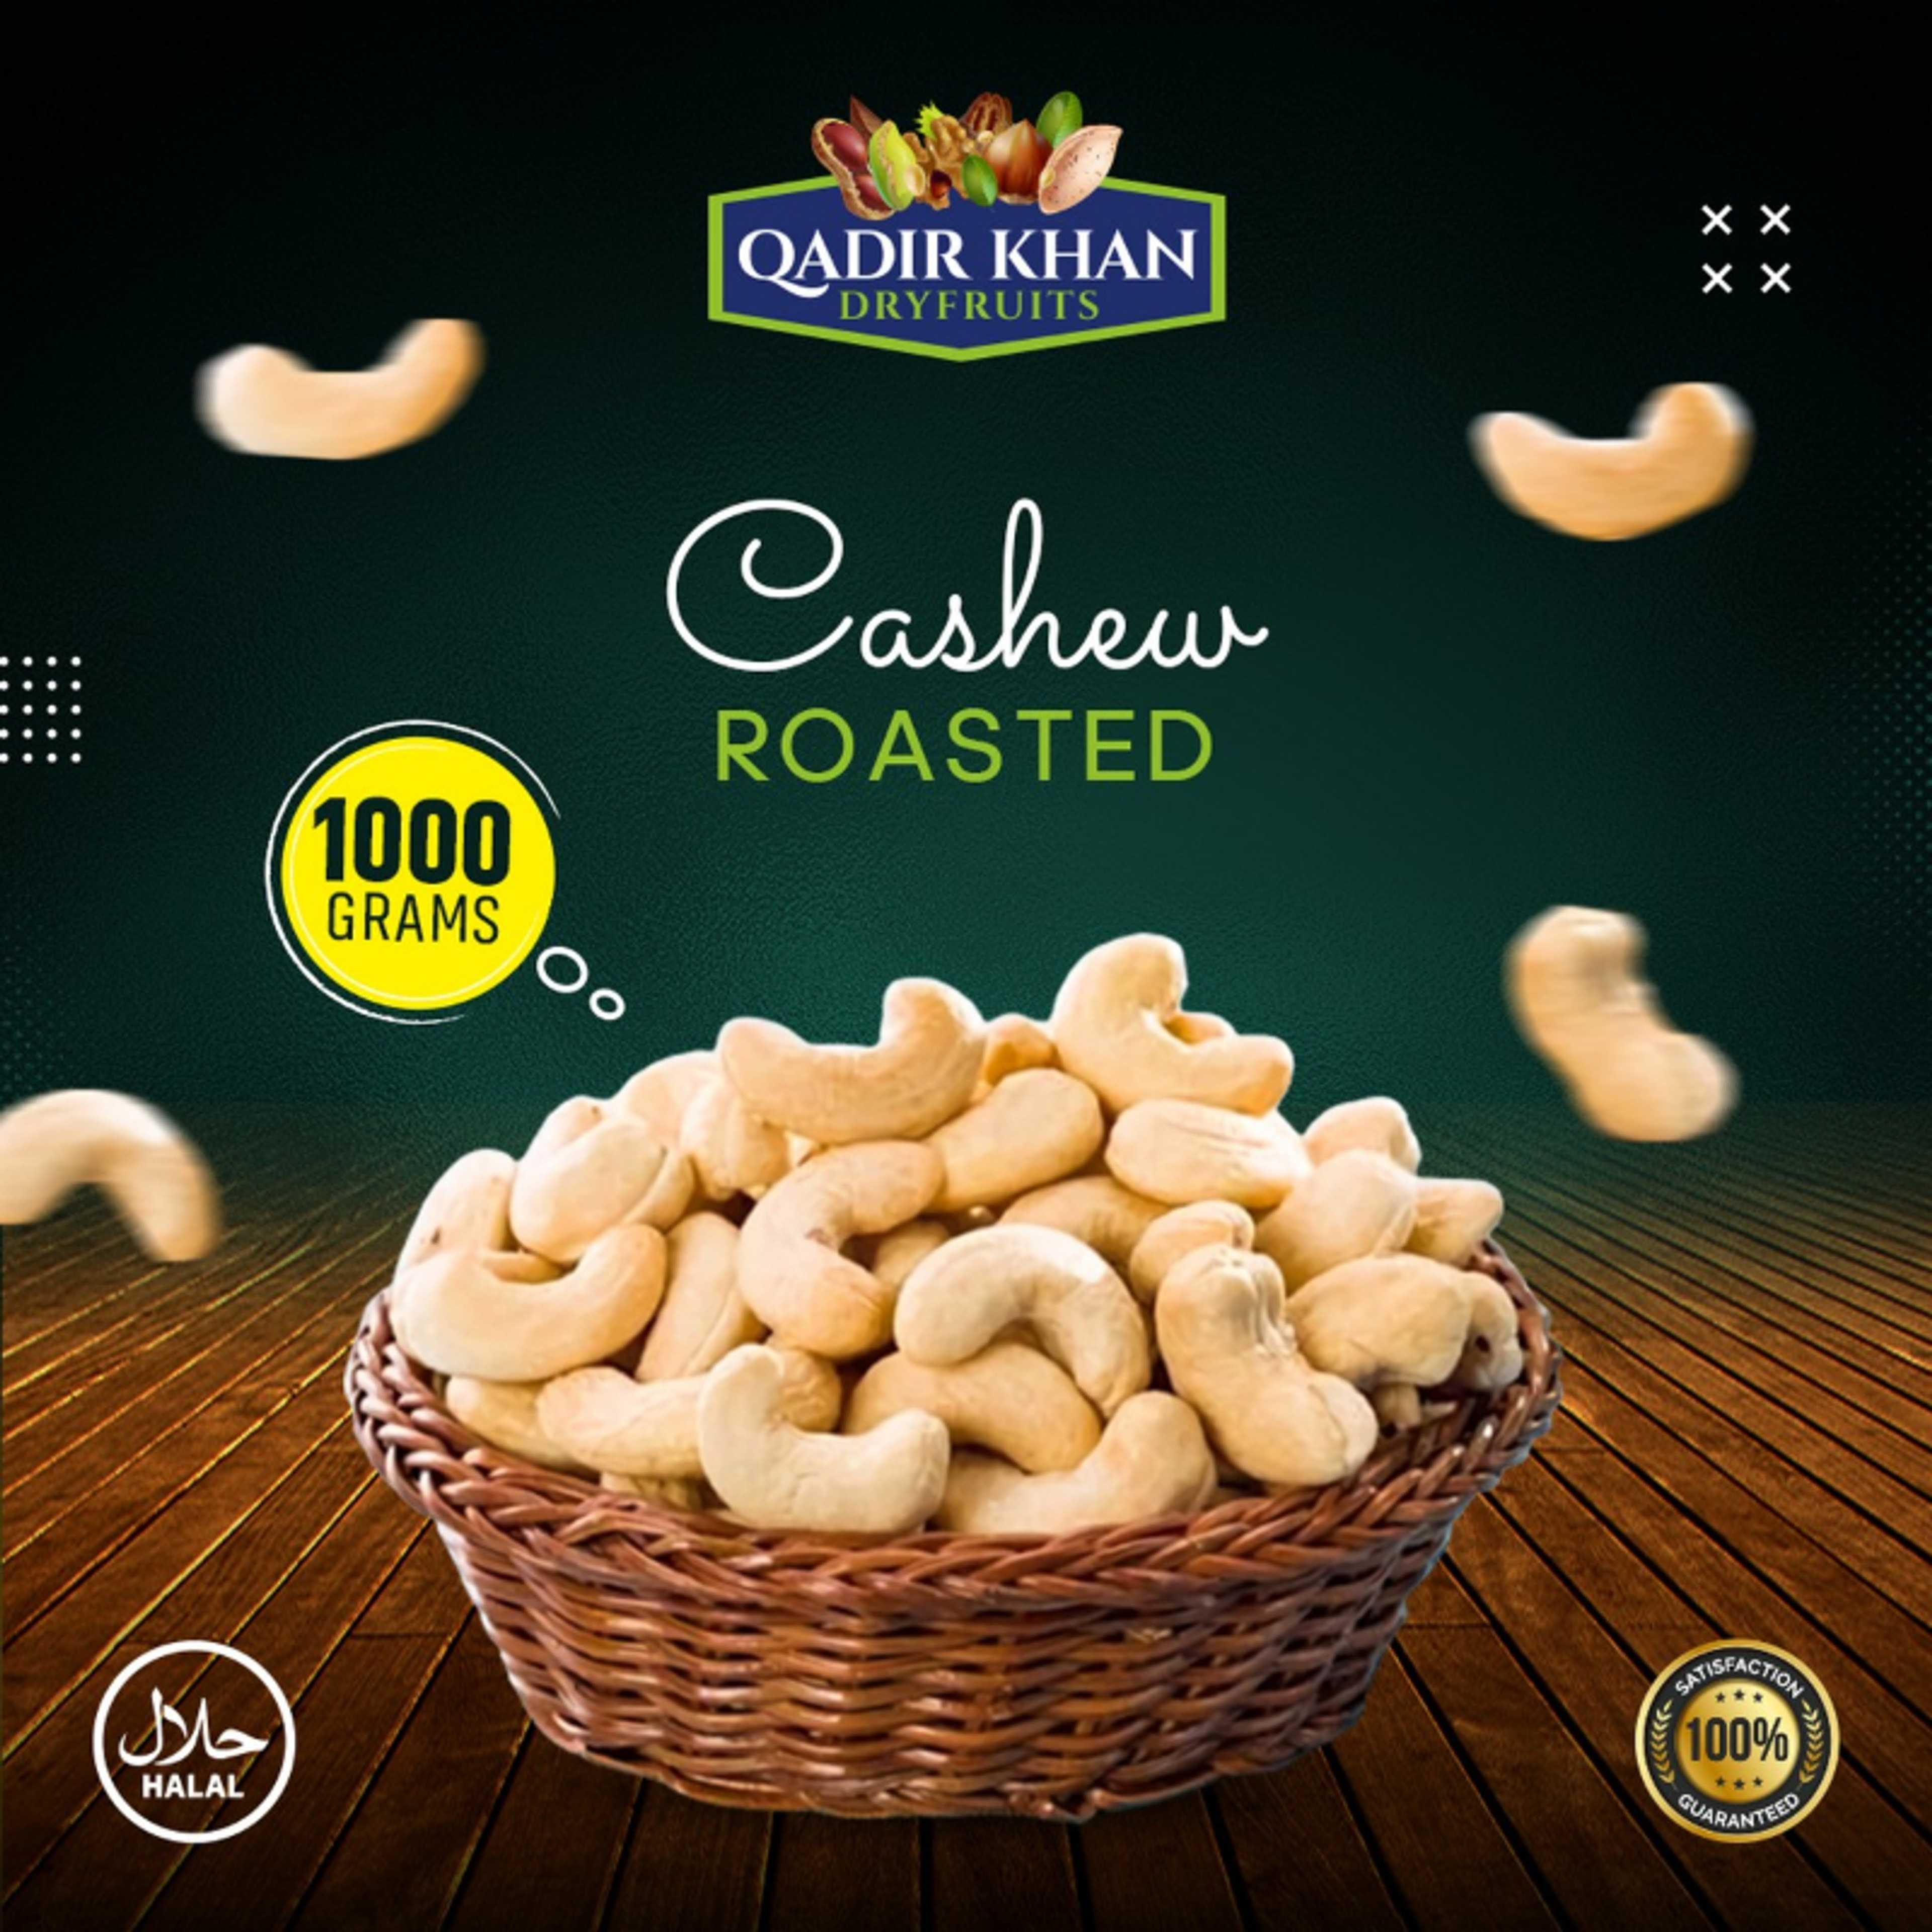 cashow nuts 240 size 1KG .1000gm 100% fresh quality